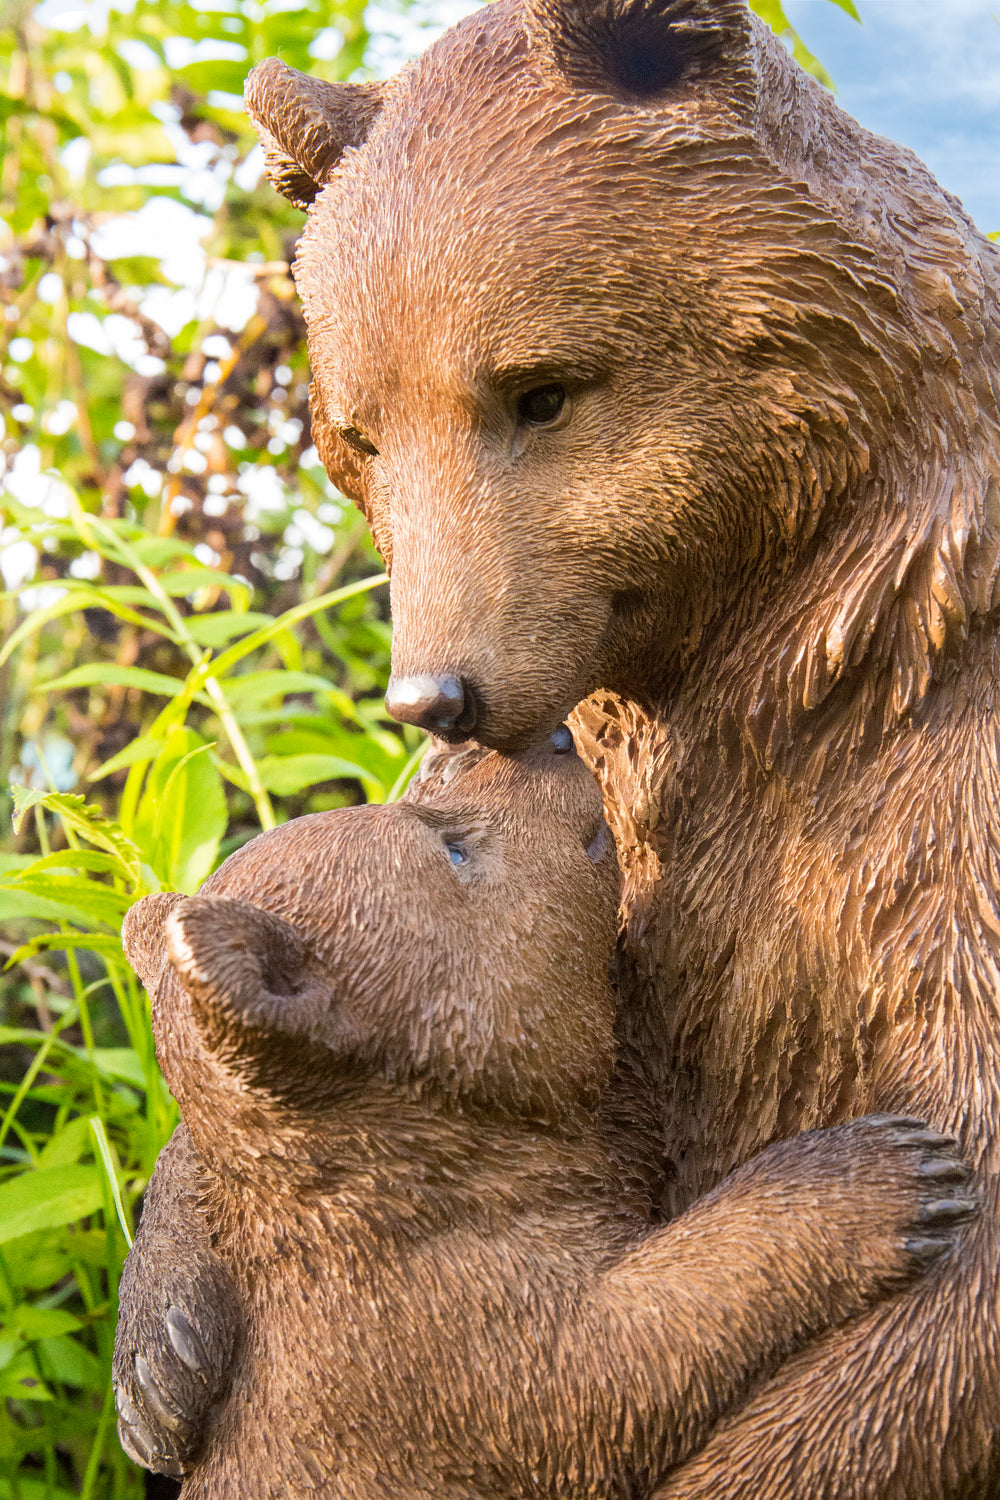 Cuddling Mother and Baby Bear Garden Statue - Brown HI-LINE GIFT LTD.